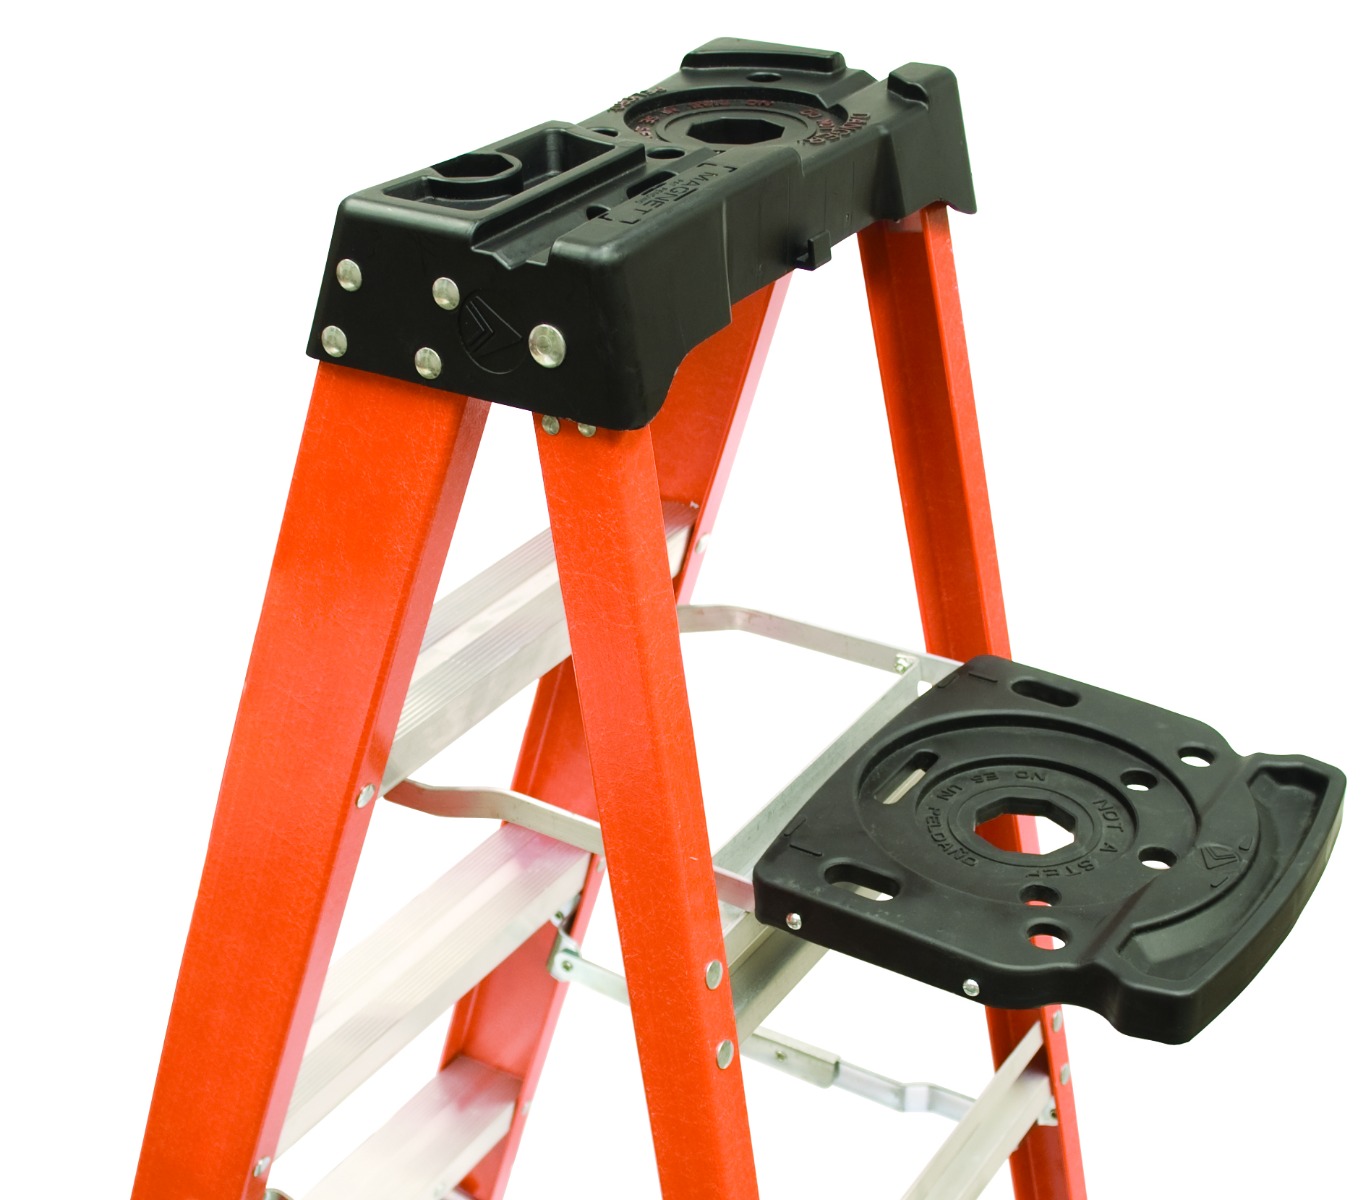 Louisville Ladder Lp-2400-00 Pail Shelf